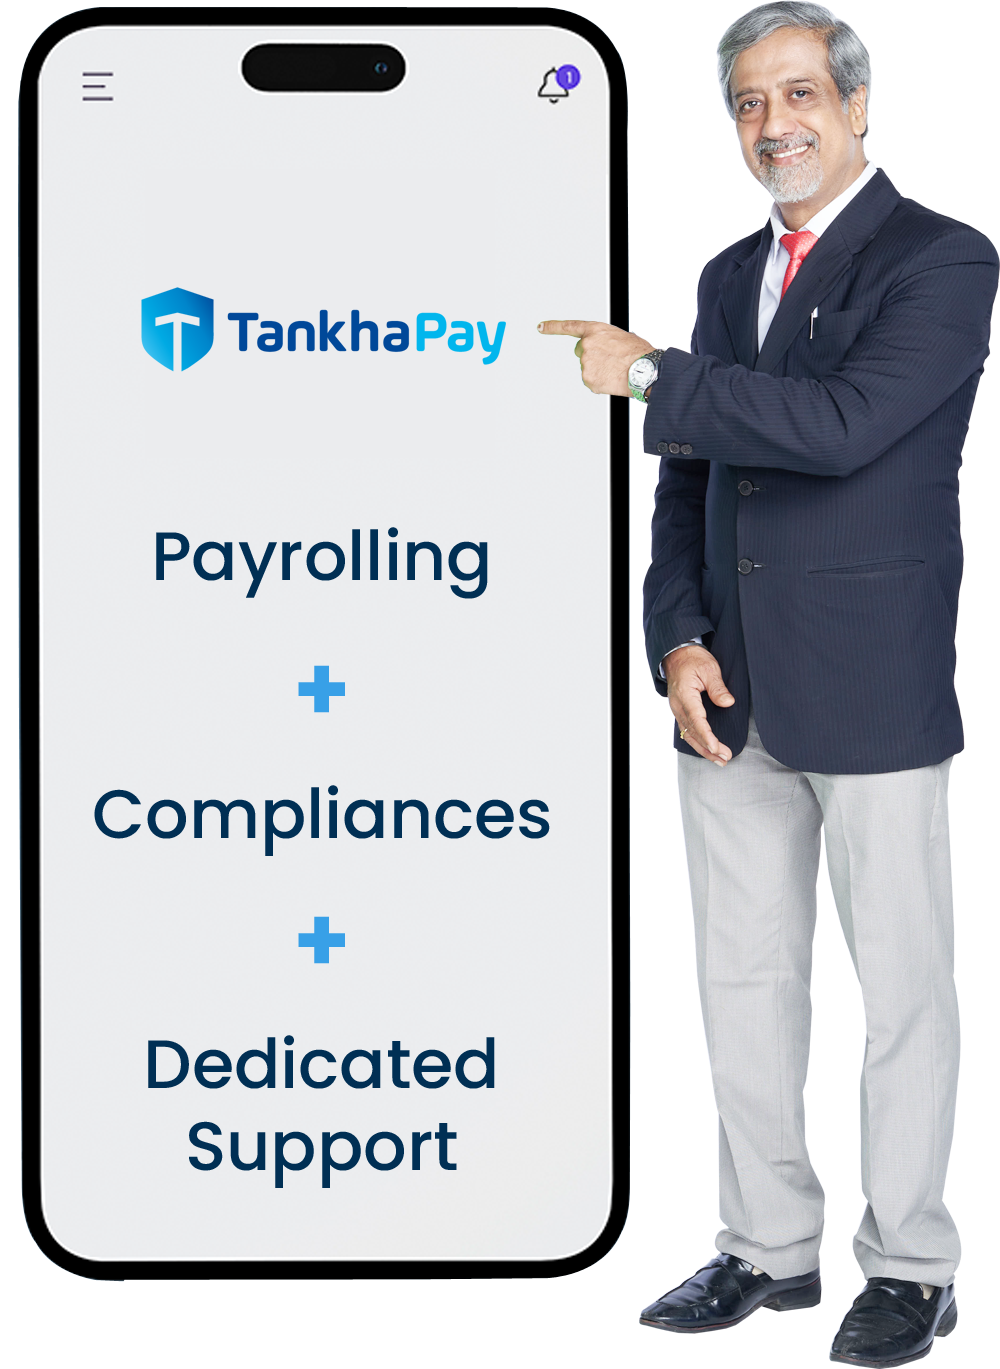 TankhaPay: Ultimate Payrolling Software